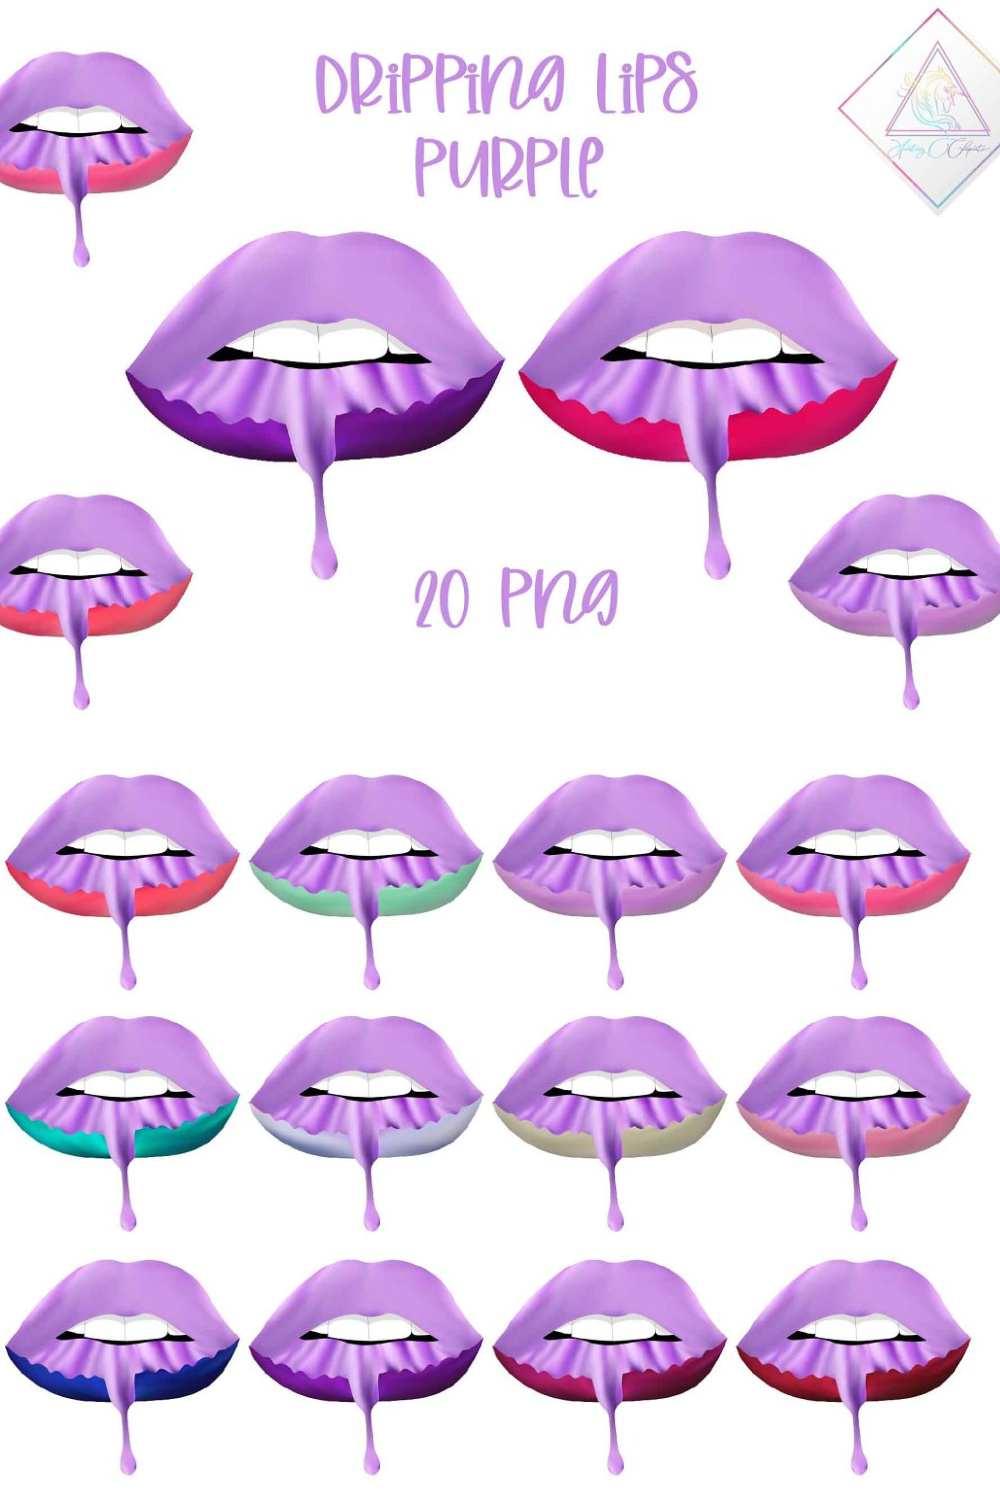 Purple Dripping Lips Clipart - Pinterest.